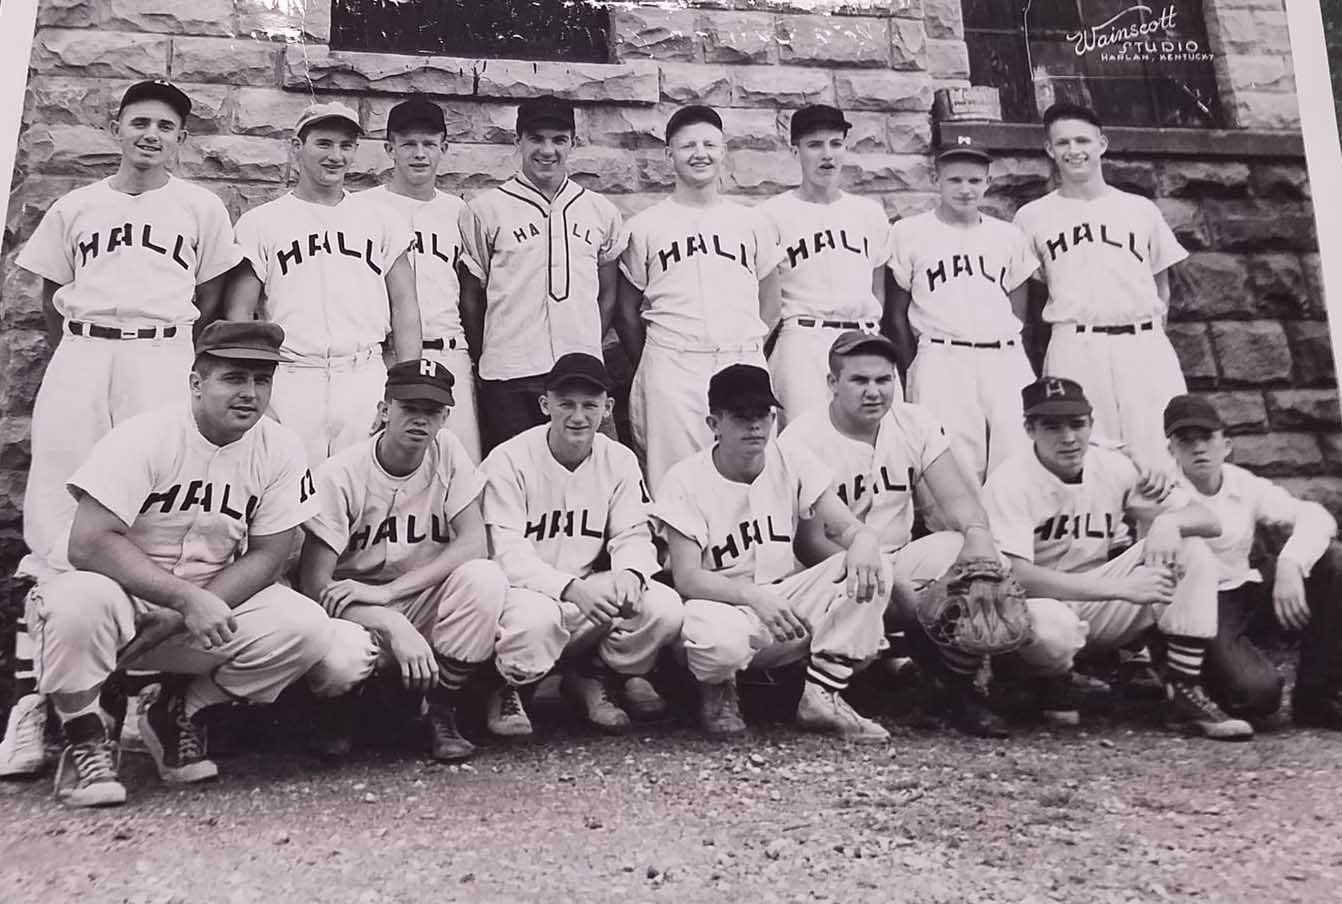  Vintage Louisville Kentucky Baseball Colonels